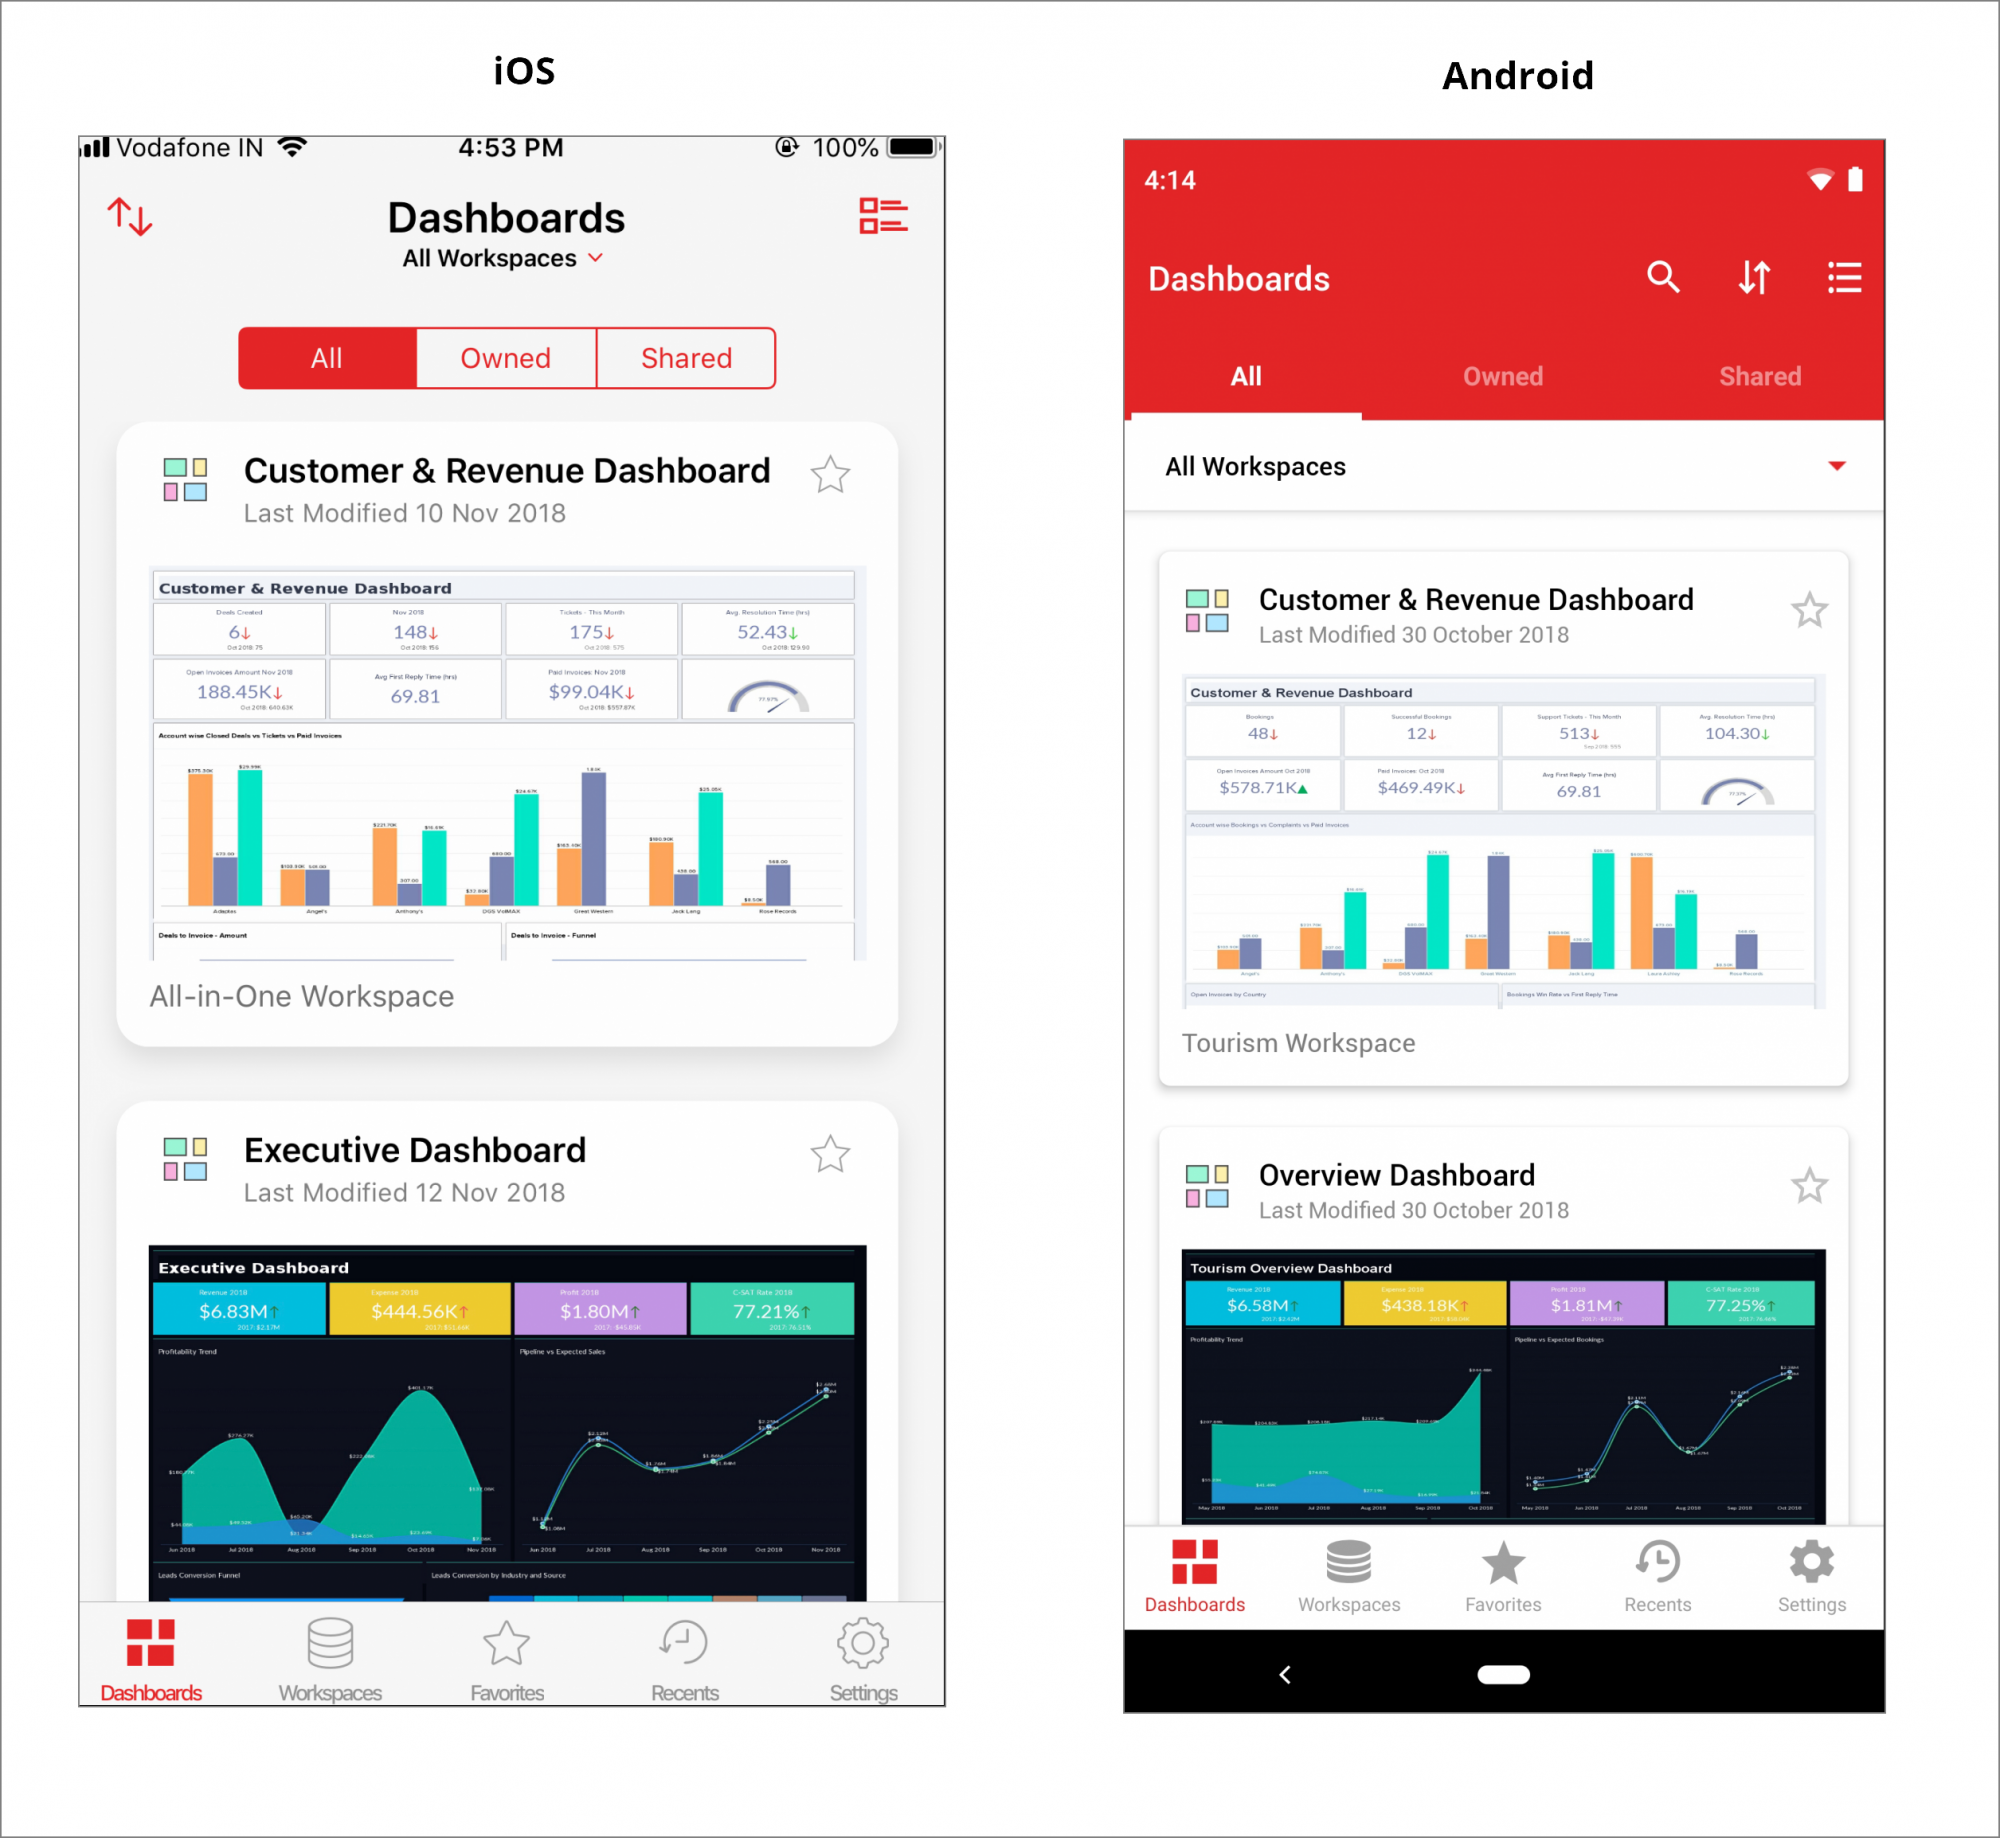 Zoho Analytics Mobile BI app in action